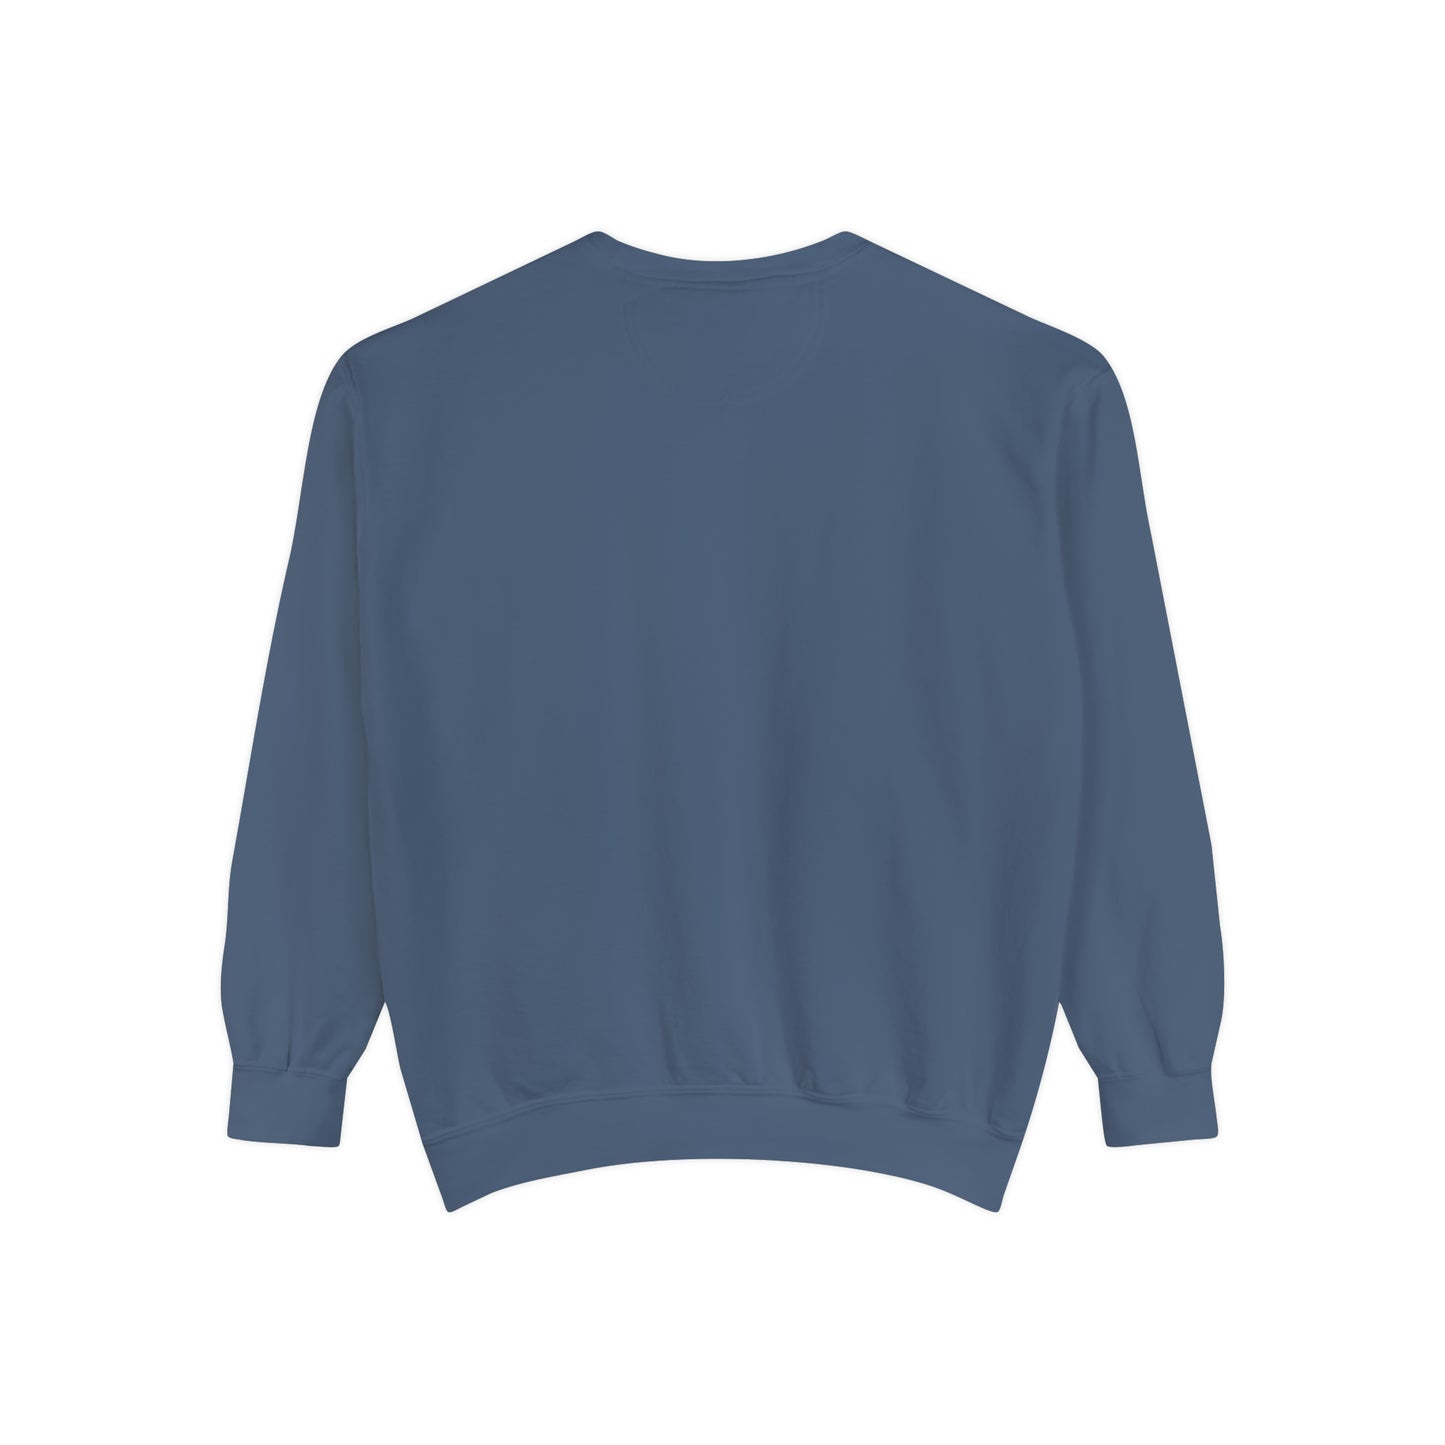 Santa Doggies Unisex Garment-Dyed Sweatshirt